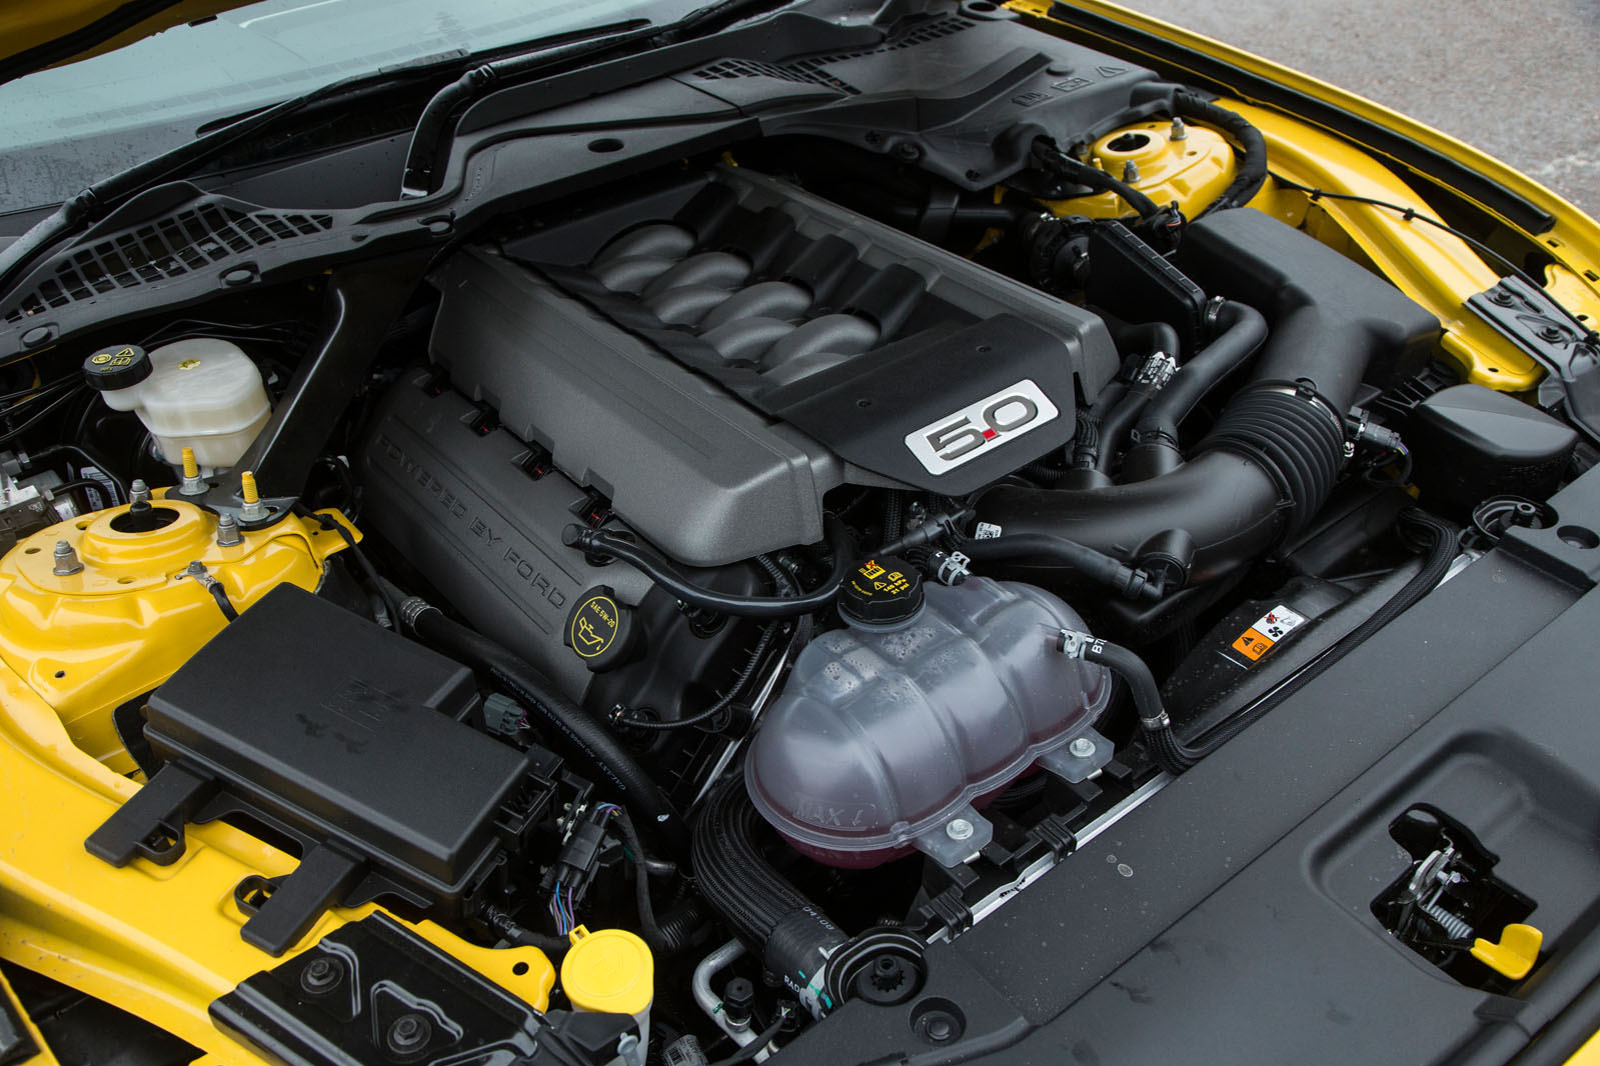 5.0-litre V8 Ford Mustang engine